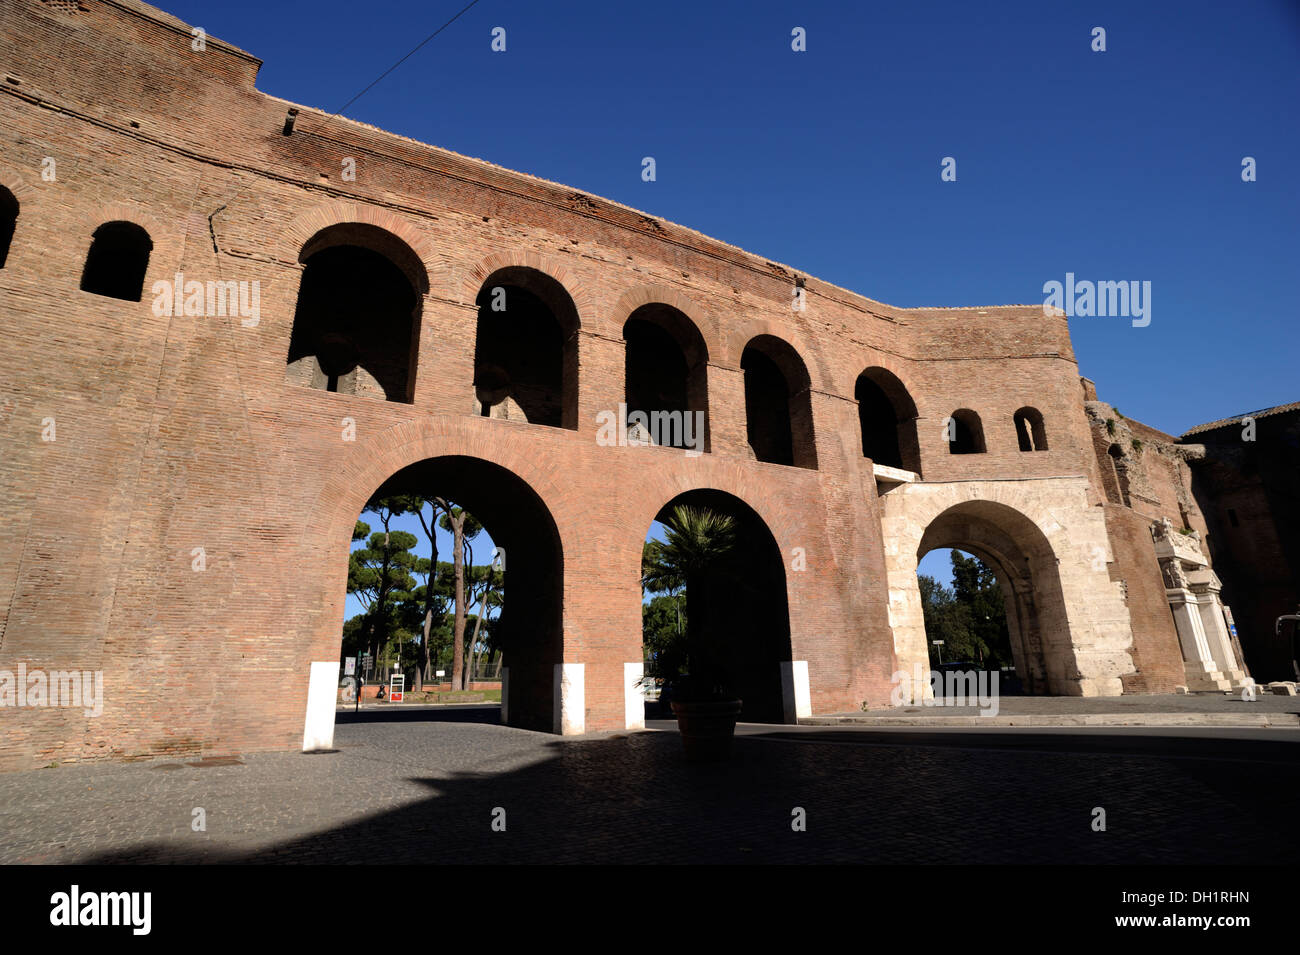 Italy, Rome, Aurelian Walls, Porta Pinciana, ancient roman gate Stock Photo